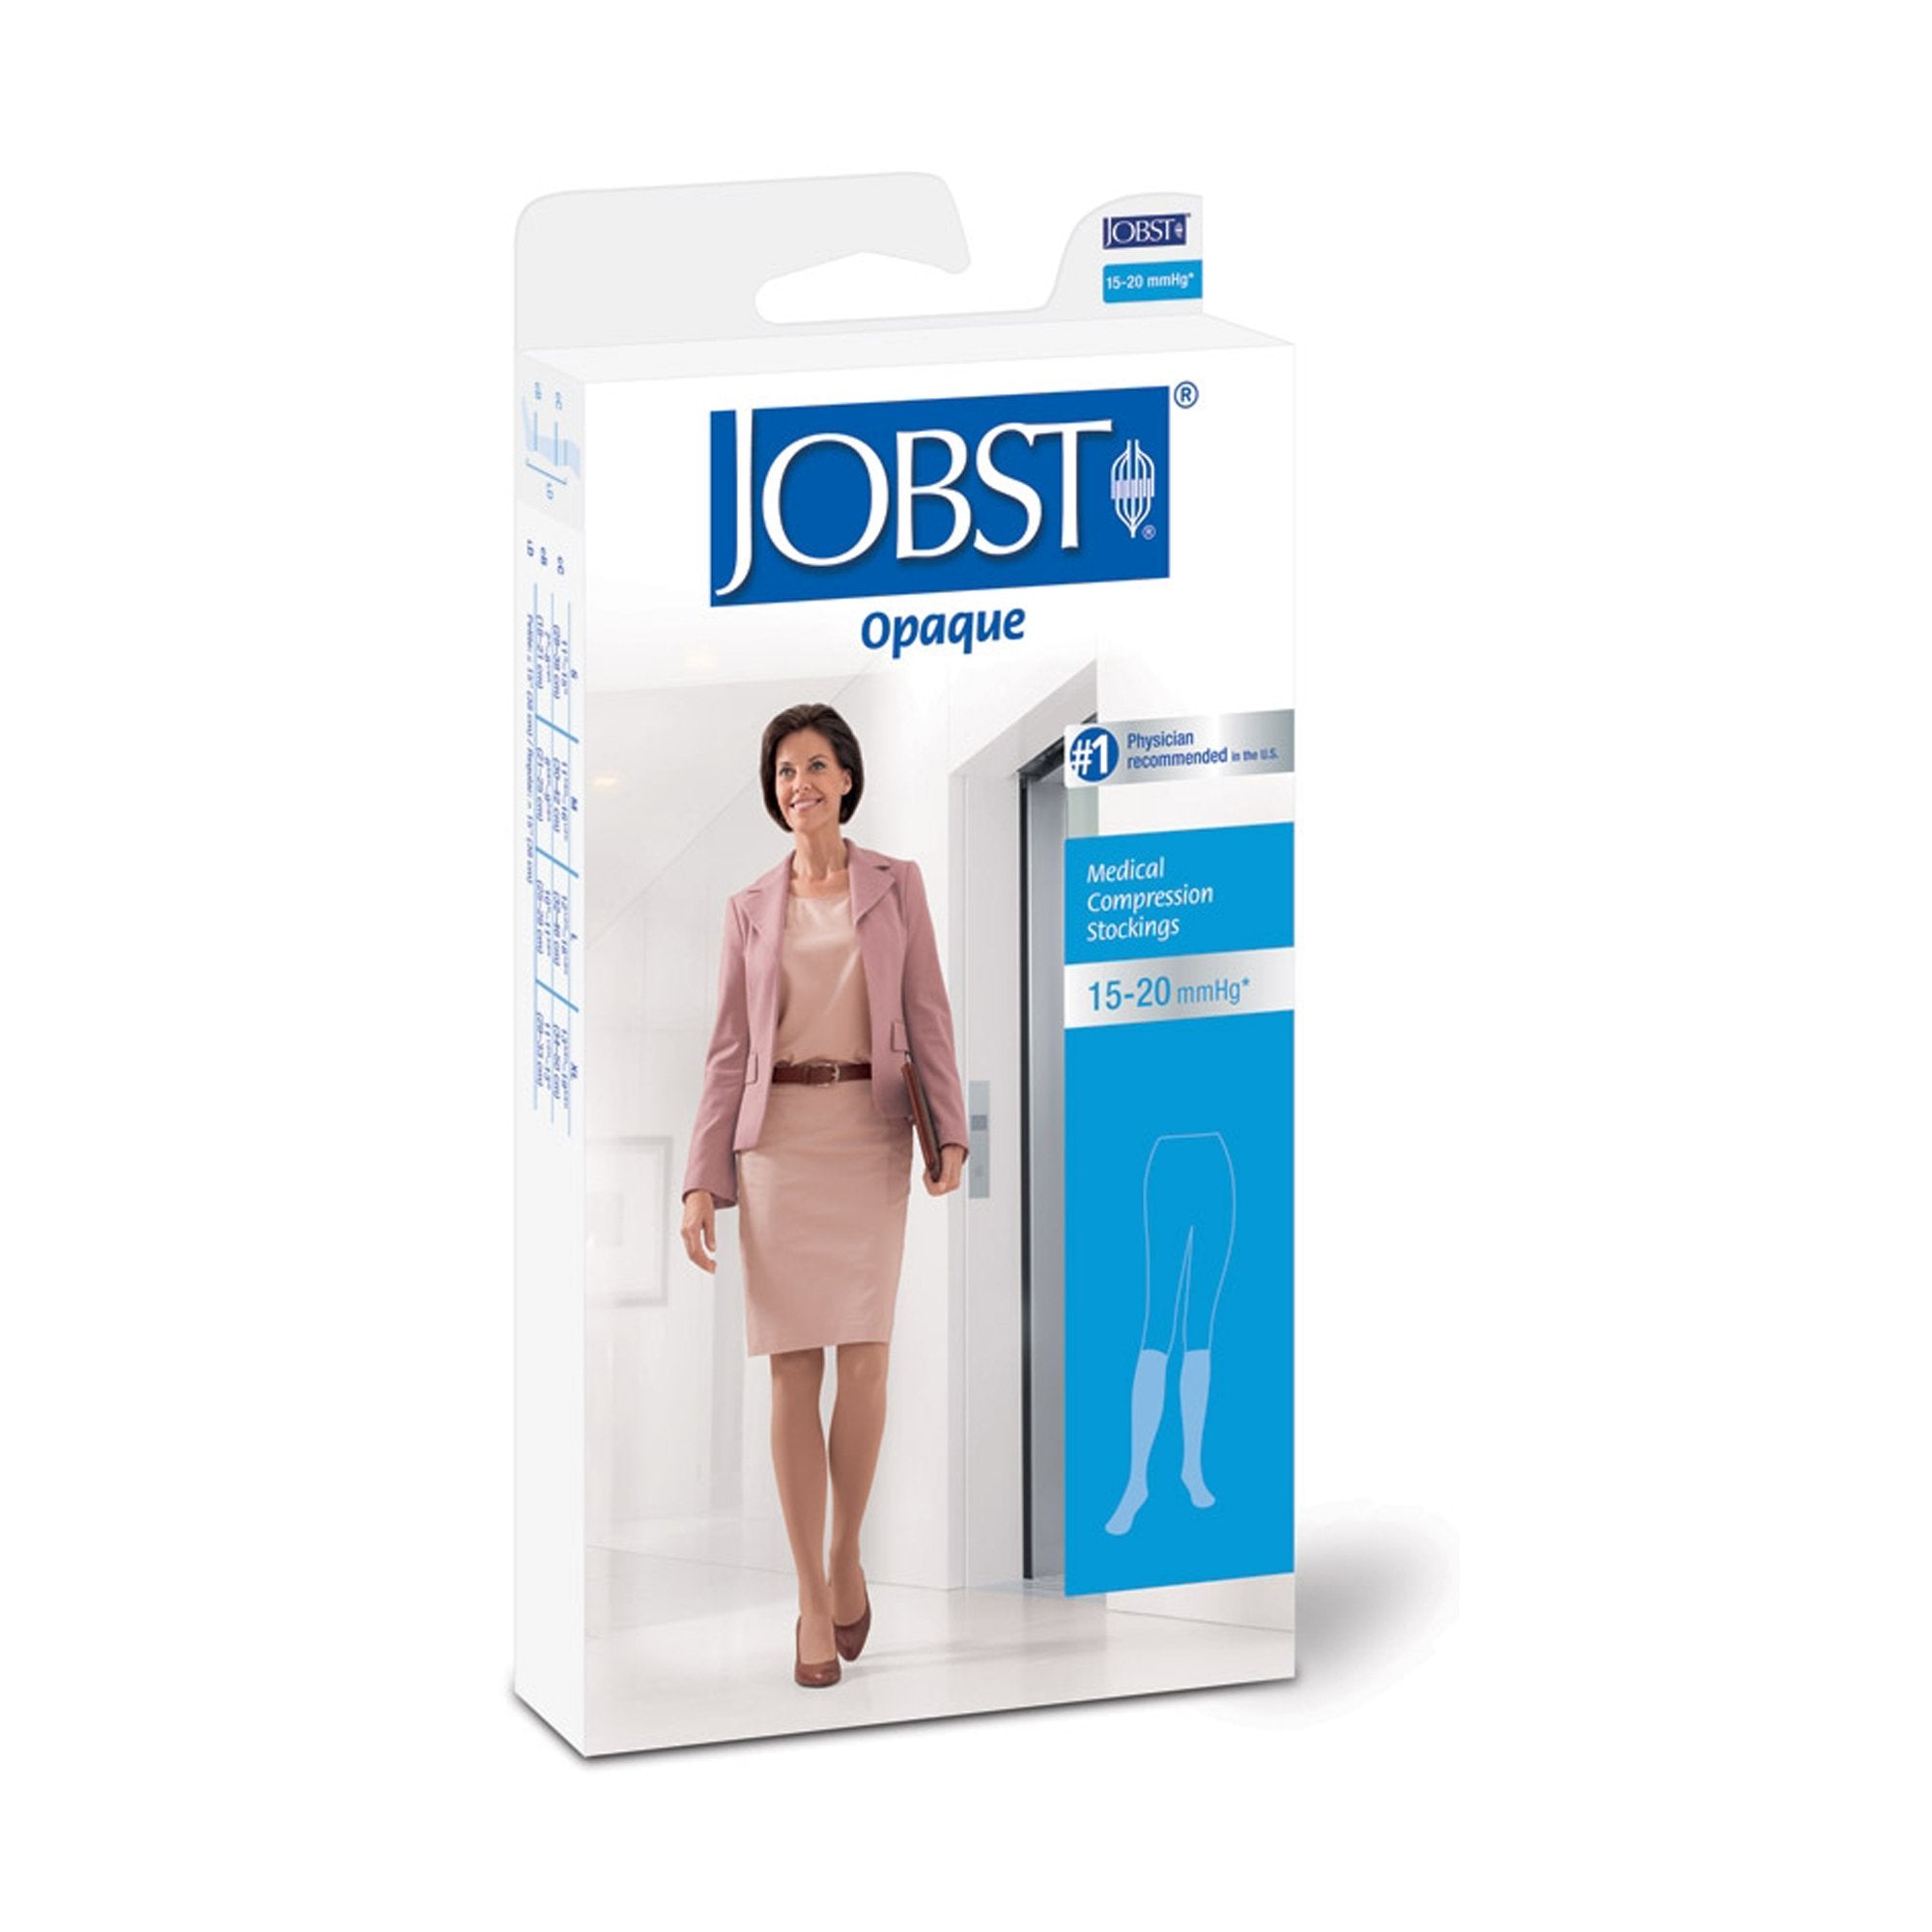 Jobst Opaque Female Compression Stocking Knee High, Medium, Natural -1 Pair